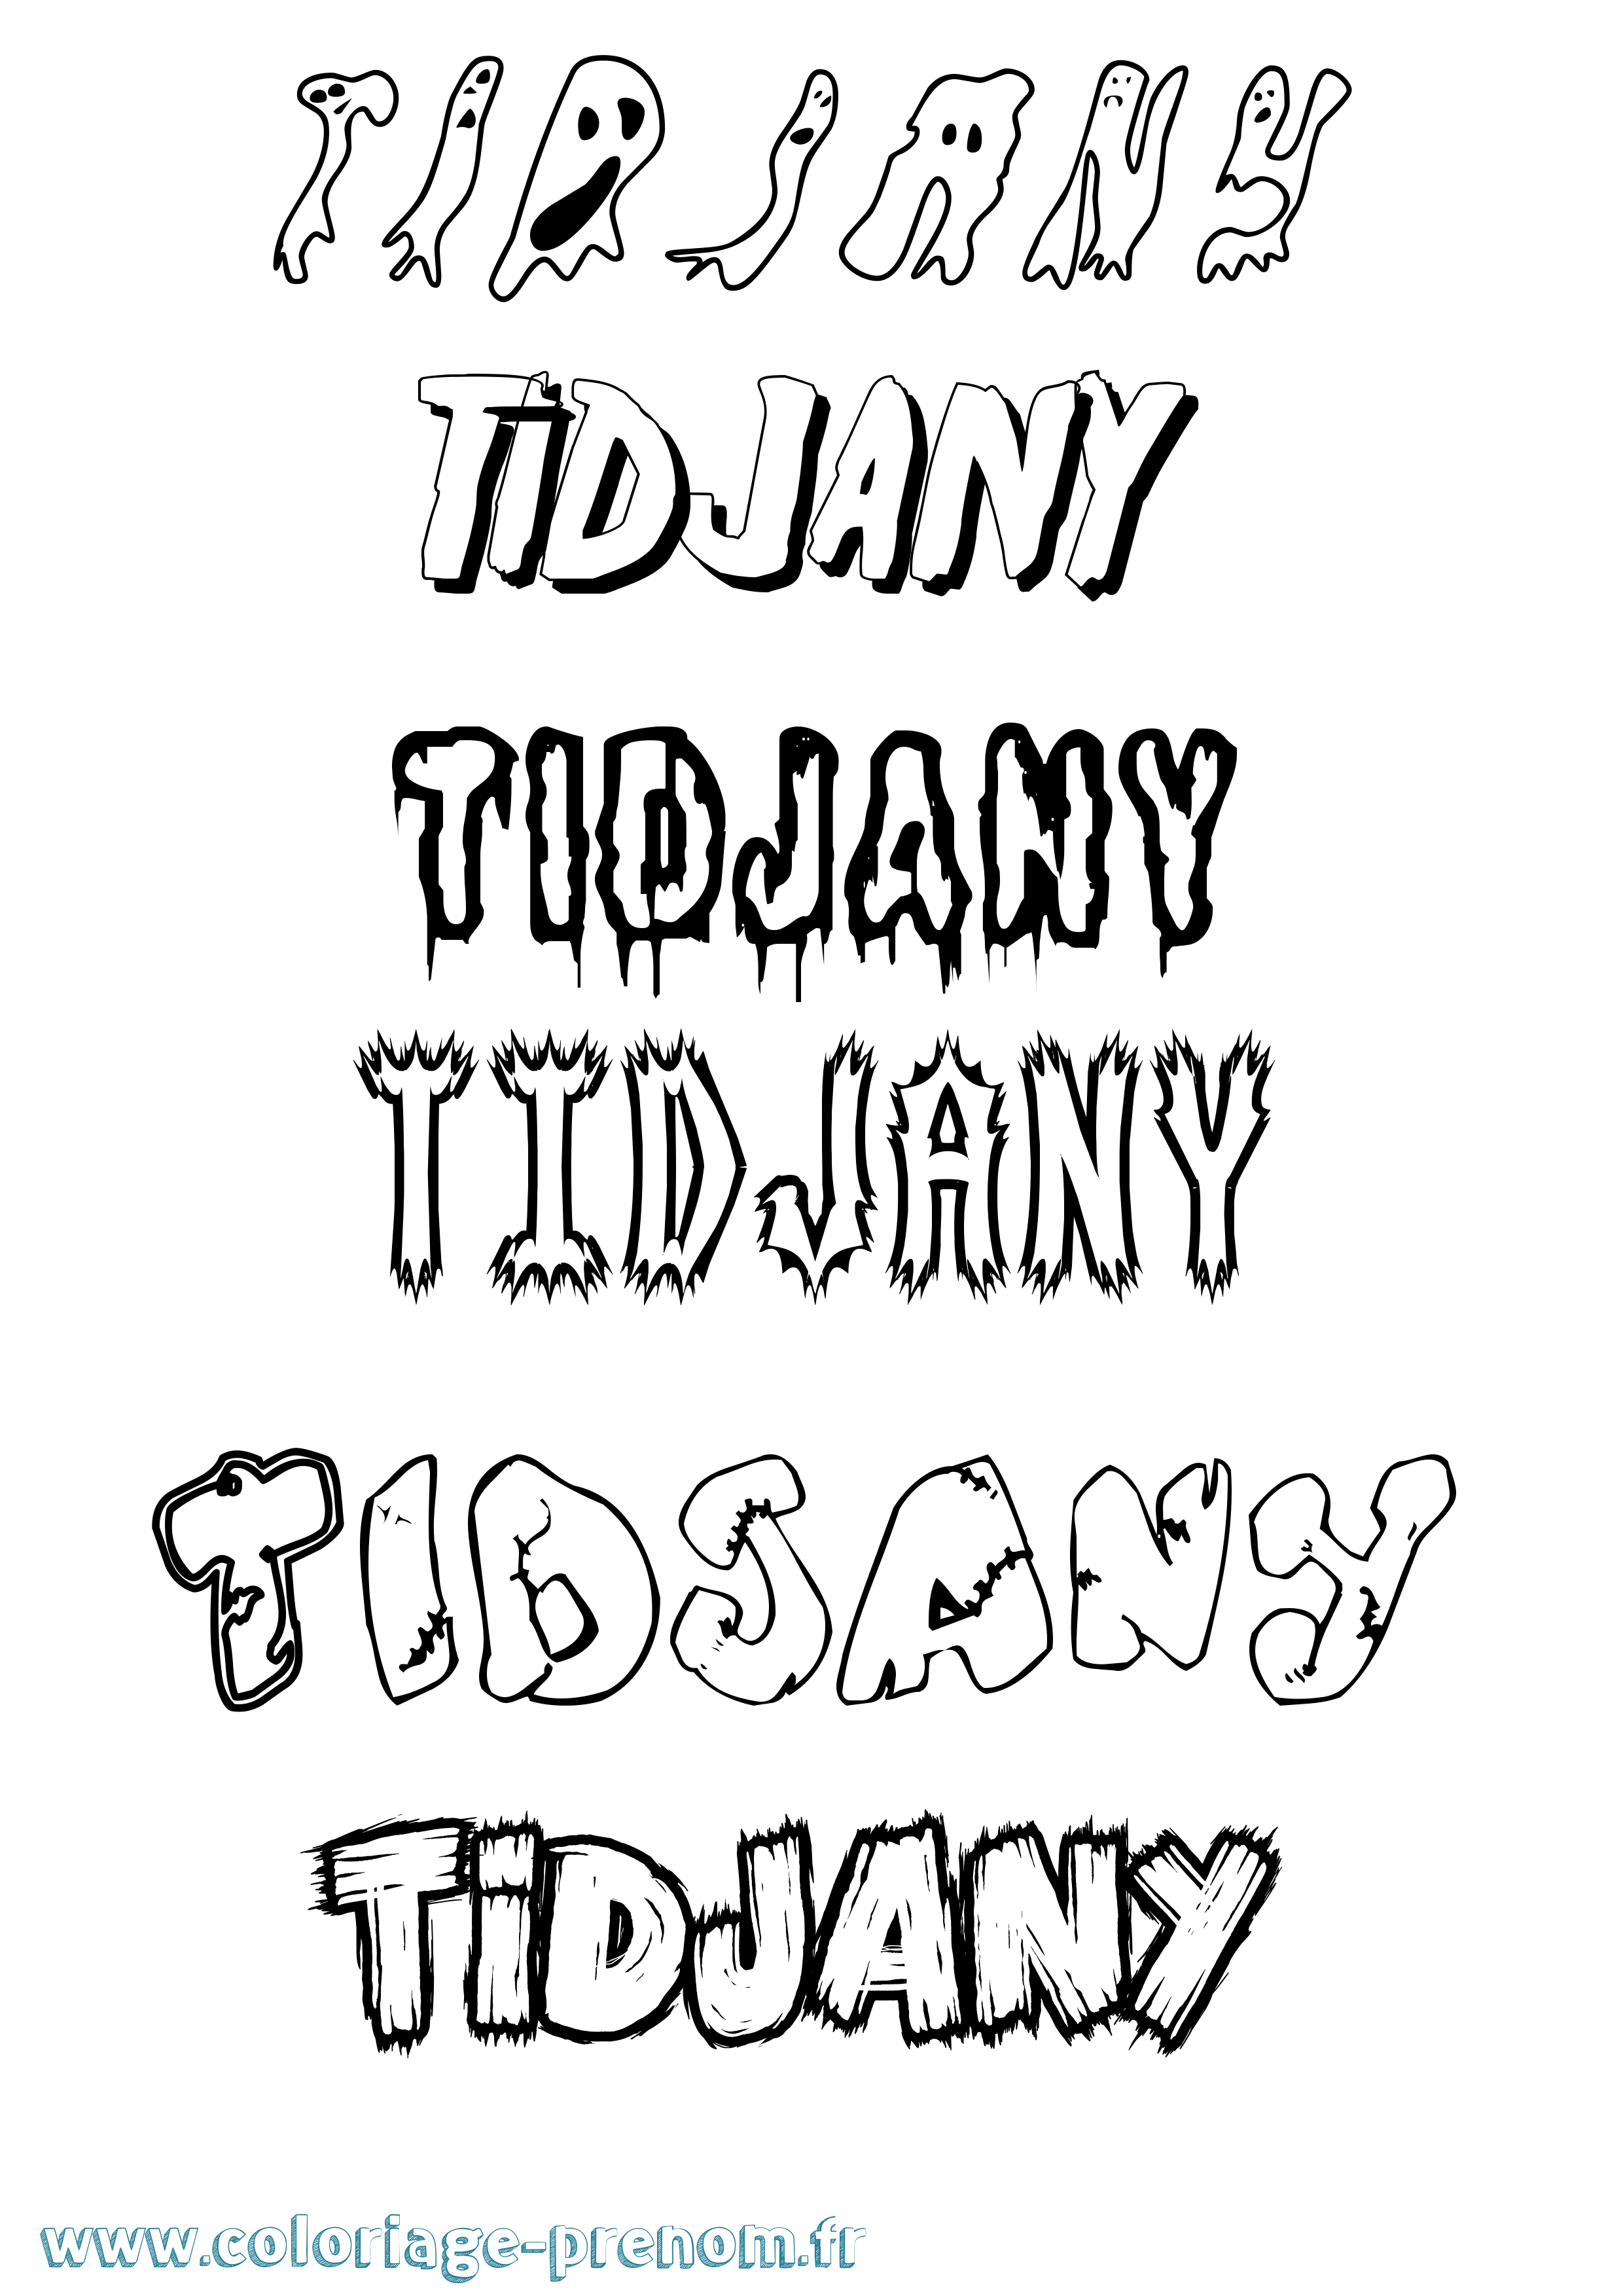 Coloriage prénom Tidjany Frisson